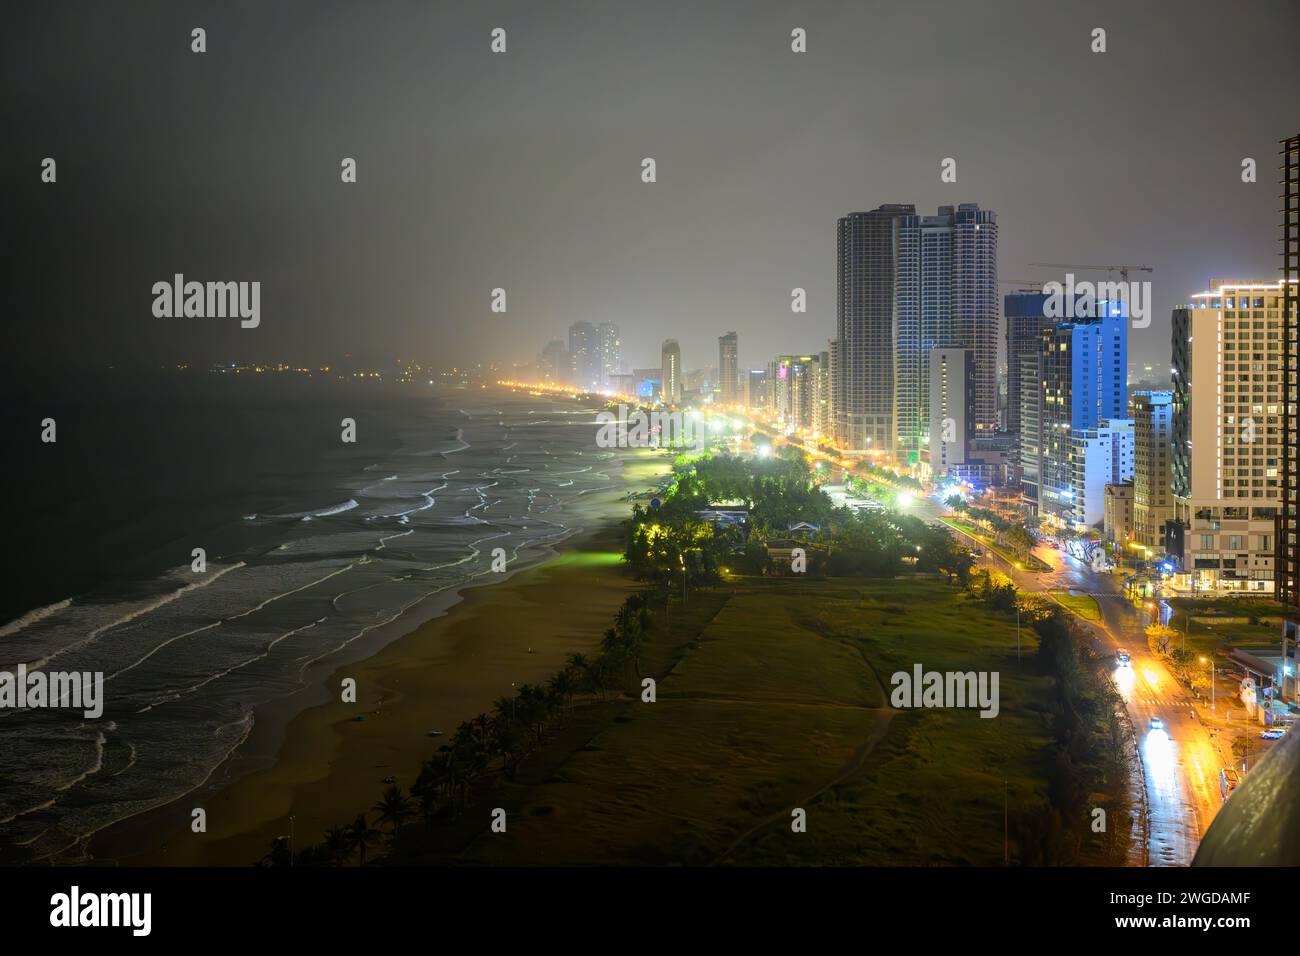 A cityscape picture of Da Nang Beach at night, Vietnam Stock Photo